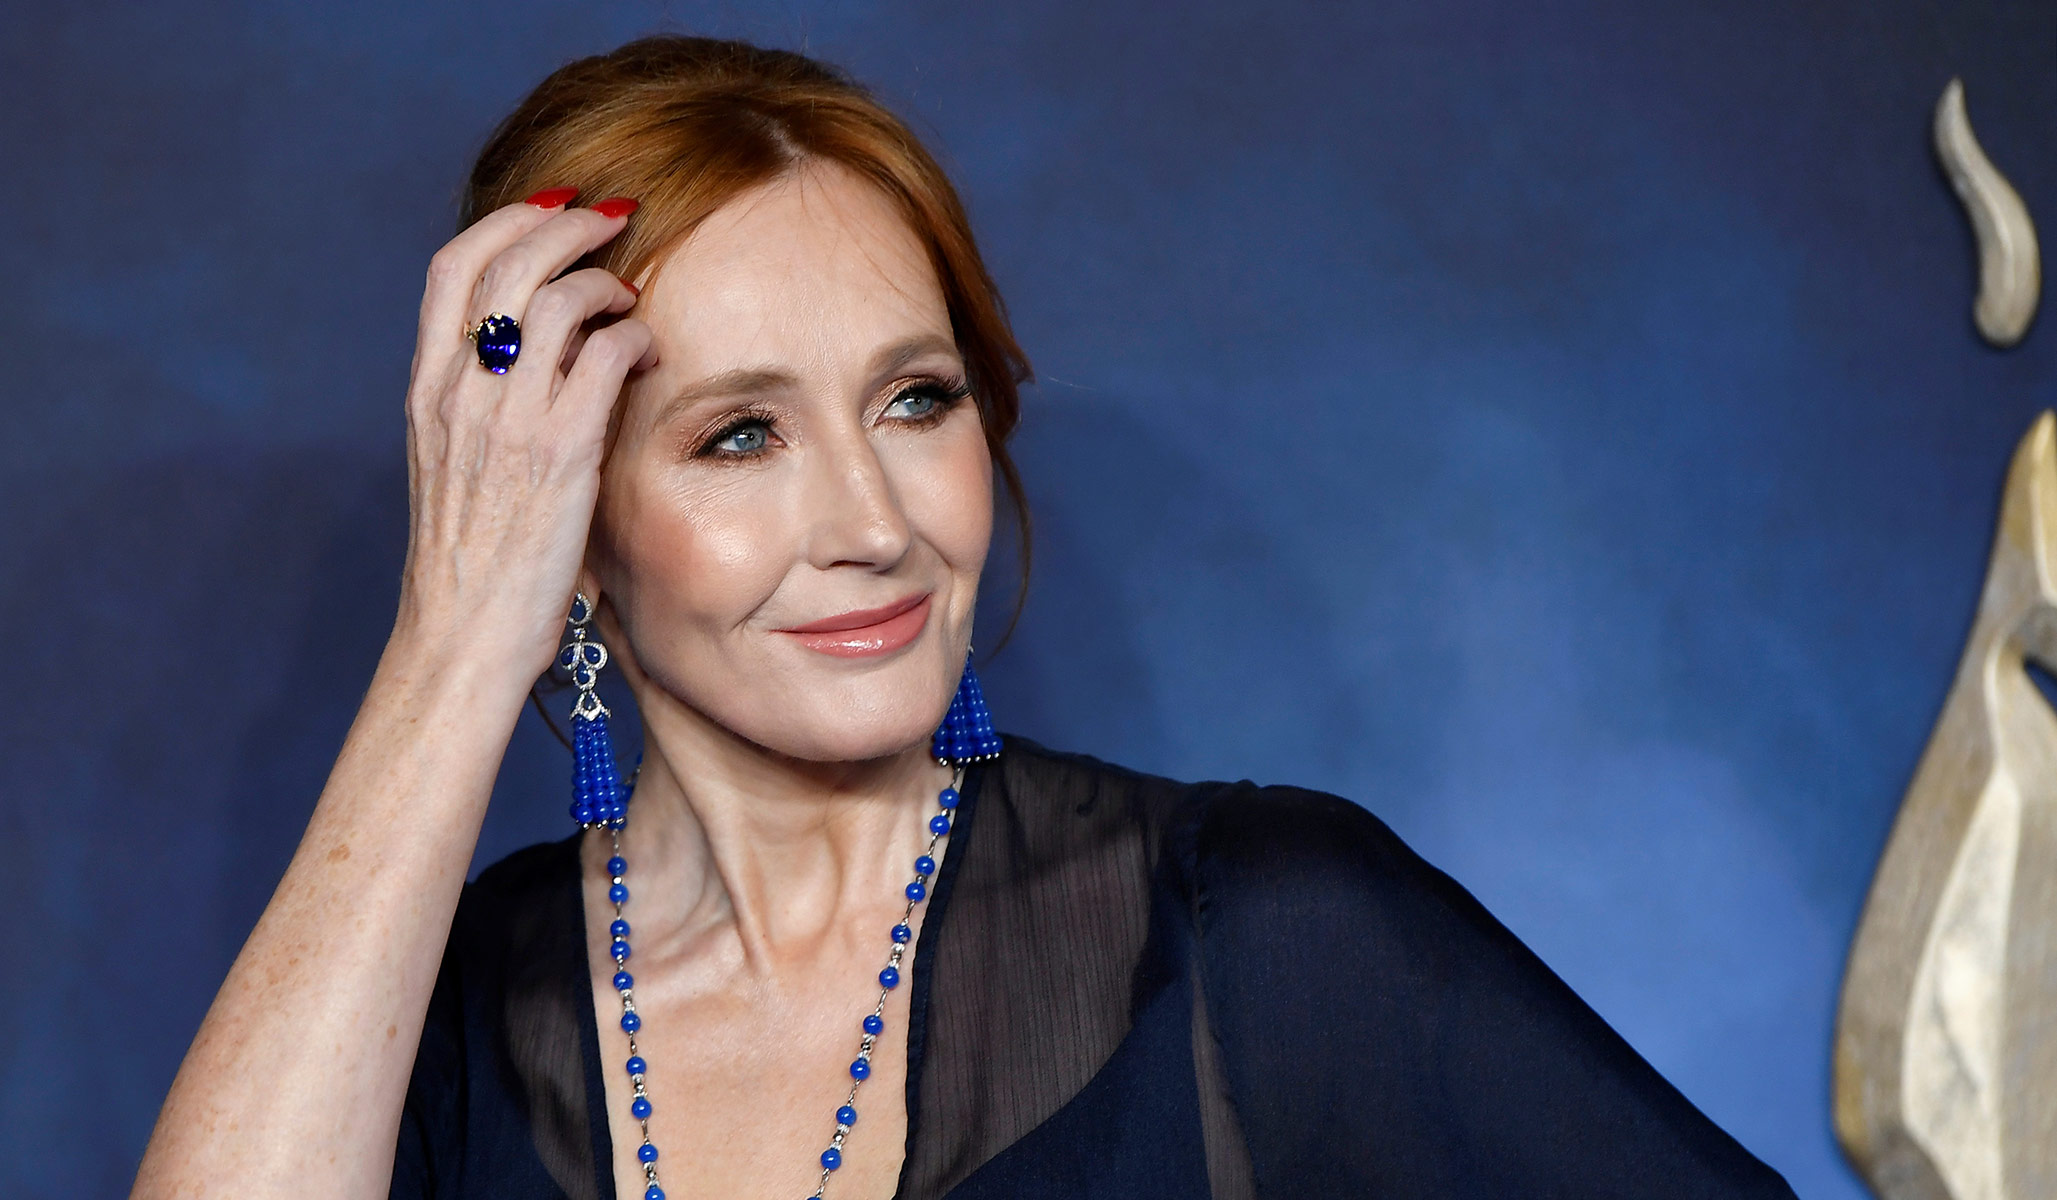 Putini stiu ca marea scriitoare J. K. Rowling a avut o viata grea: depresie, saracie si divort